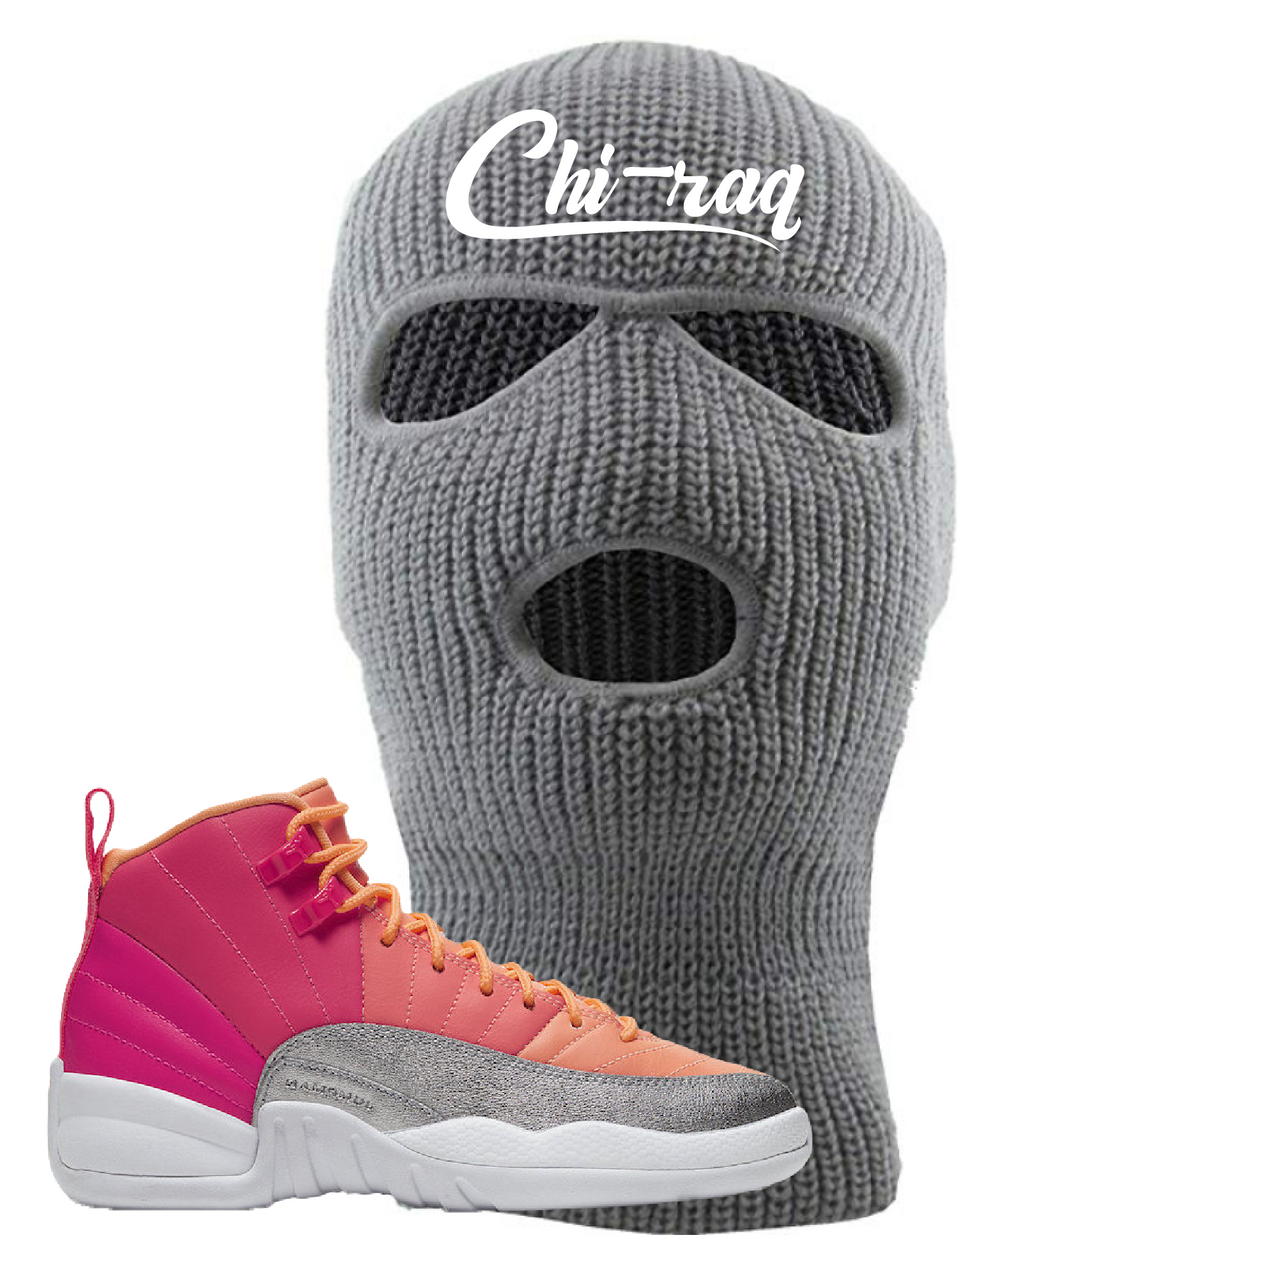 Jordan 12 GS Hot Punch Chiraq Light Gray Sneaker Hook Up Ski Mask